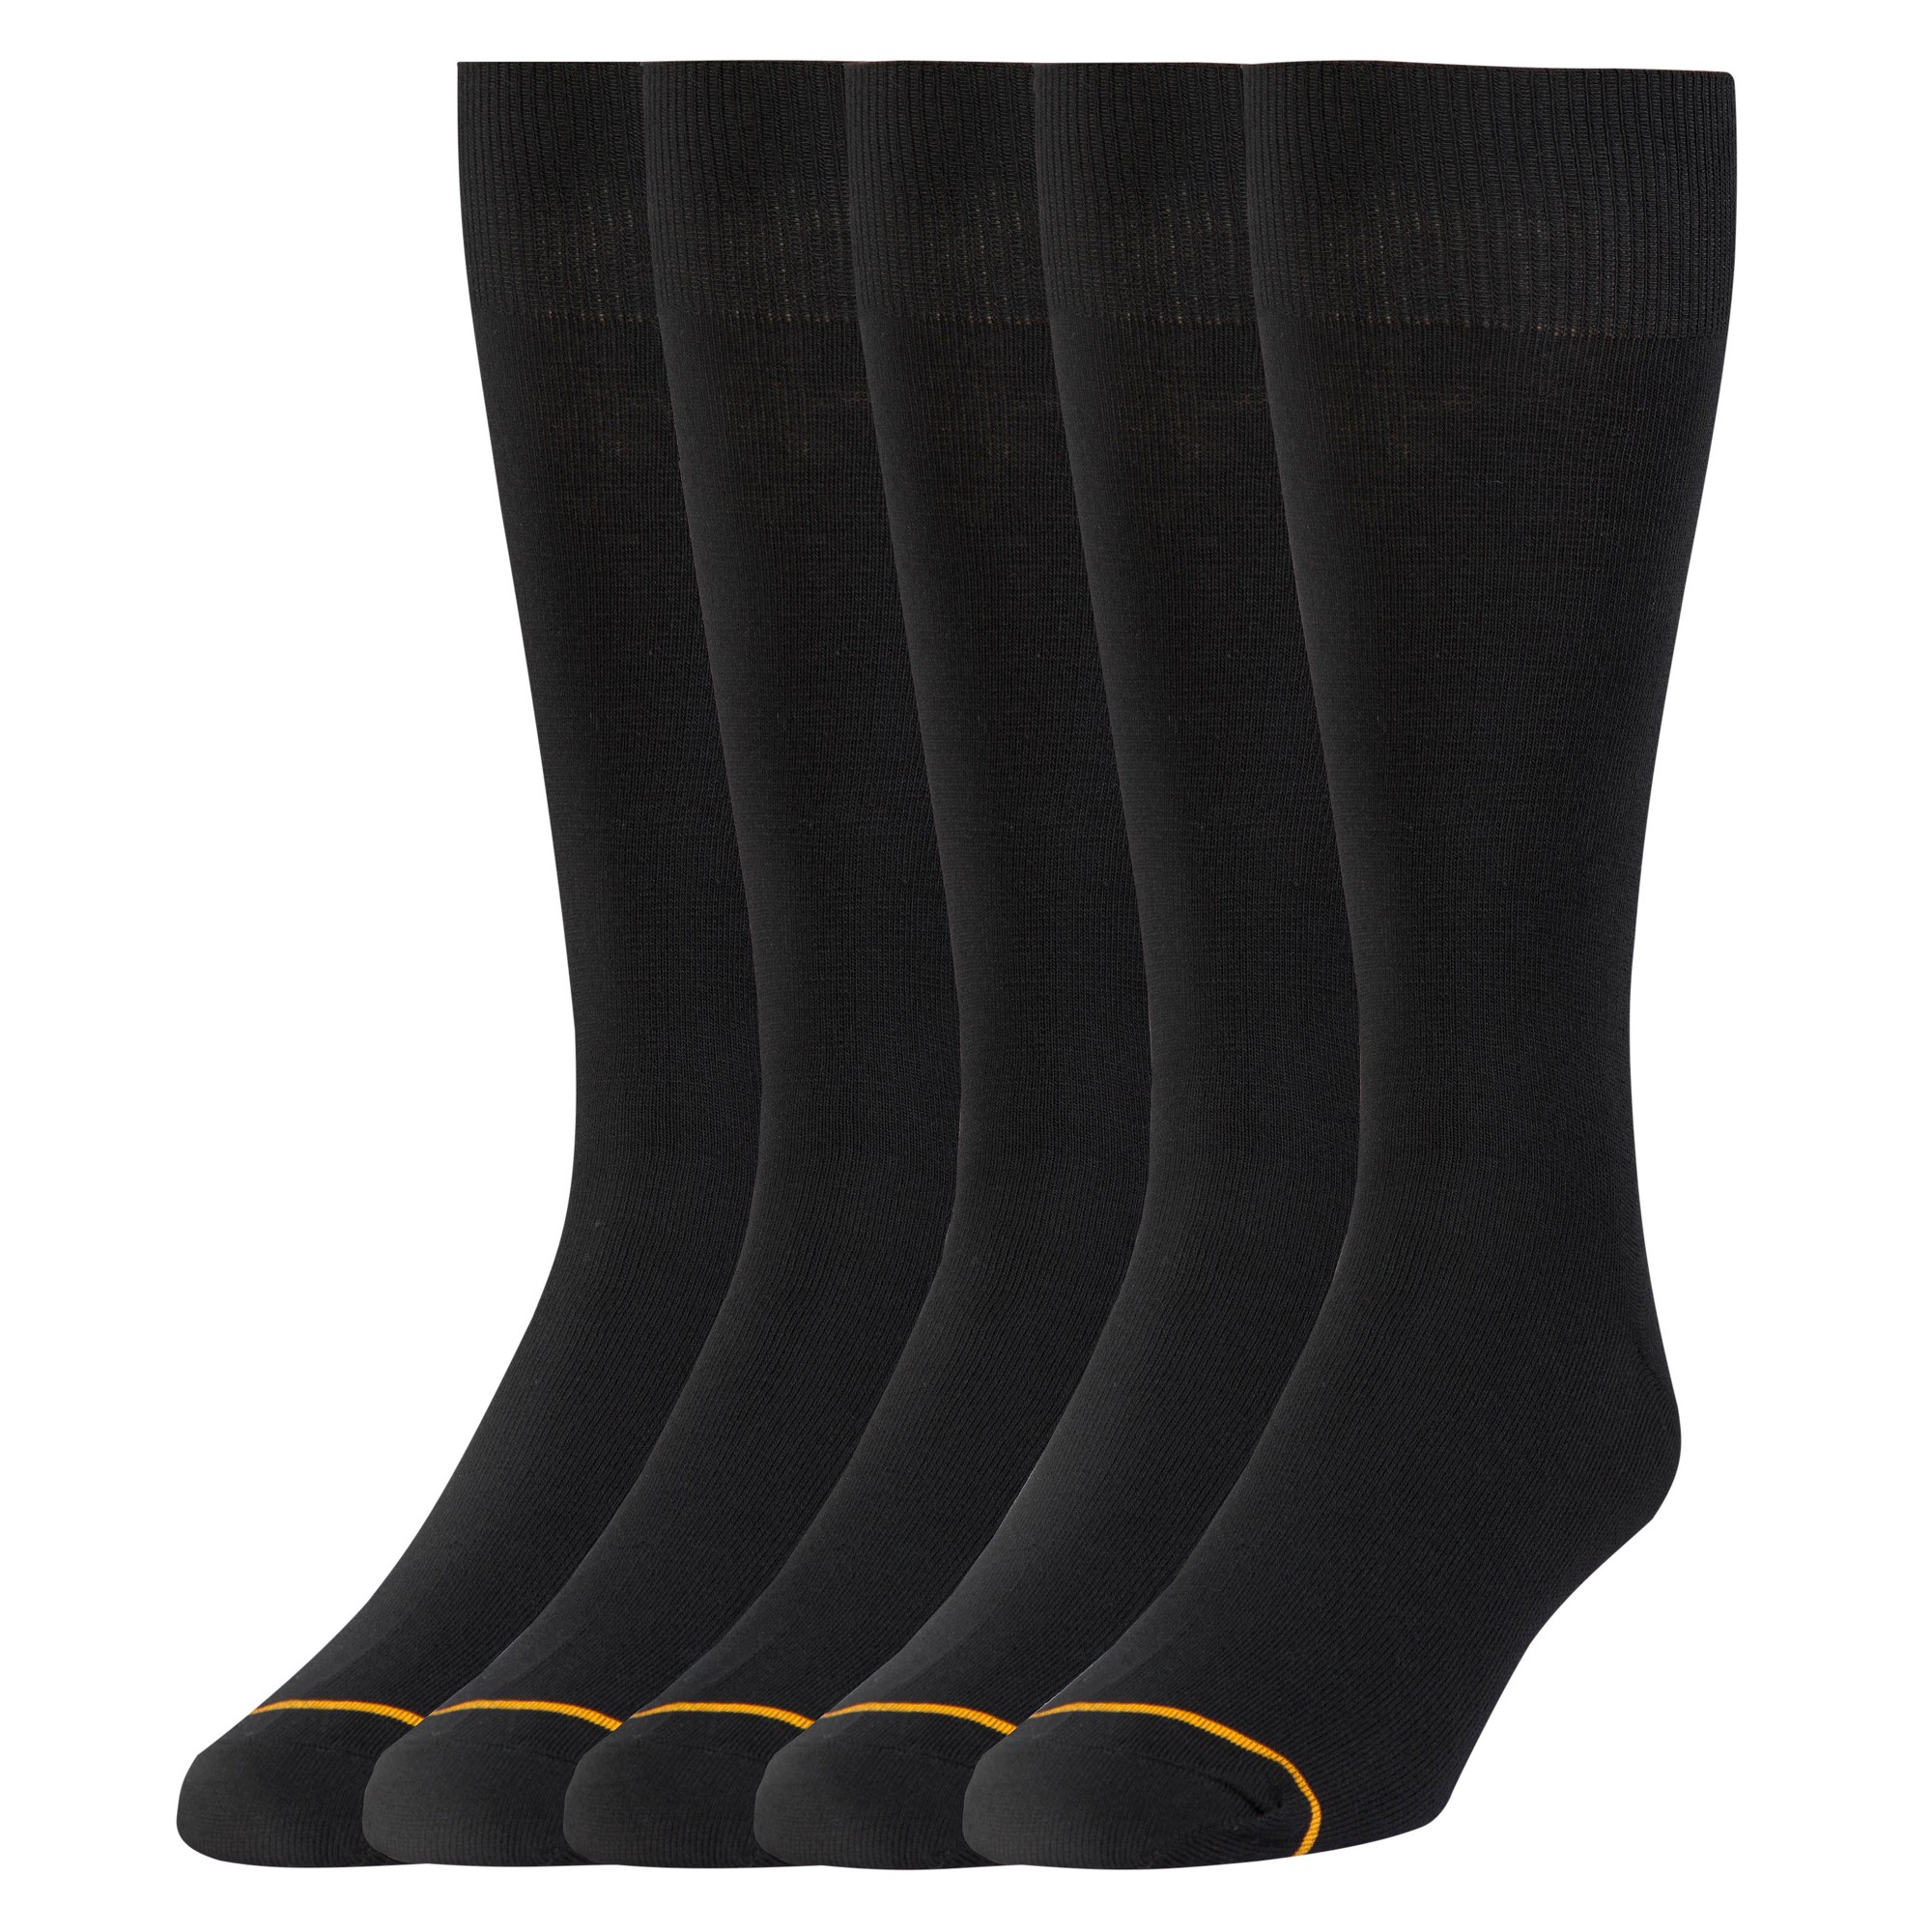 Signature Gold by GOLDTOE Men's Flatknit Crew Socks 5pk - Black 6-12, Men's